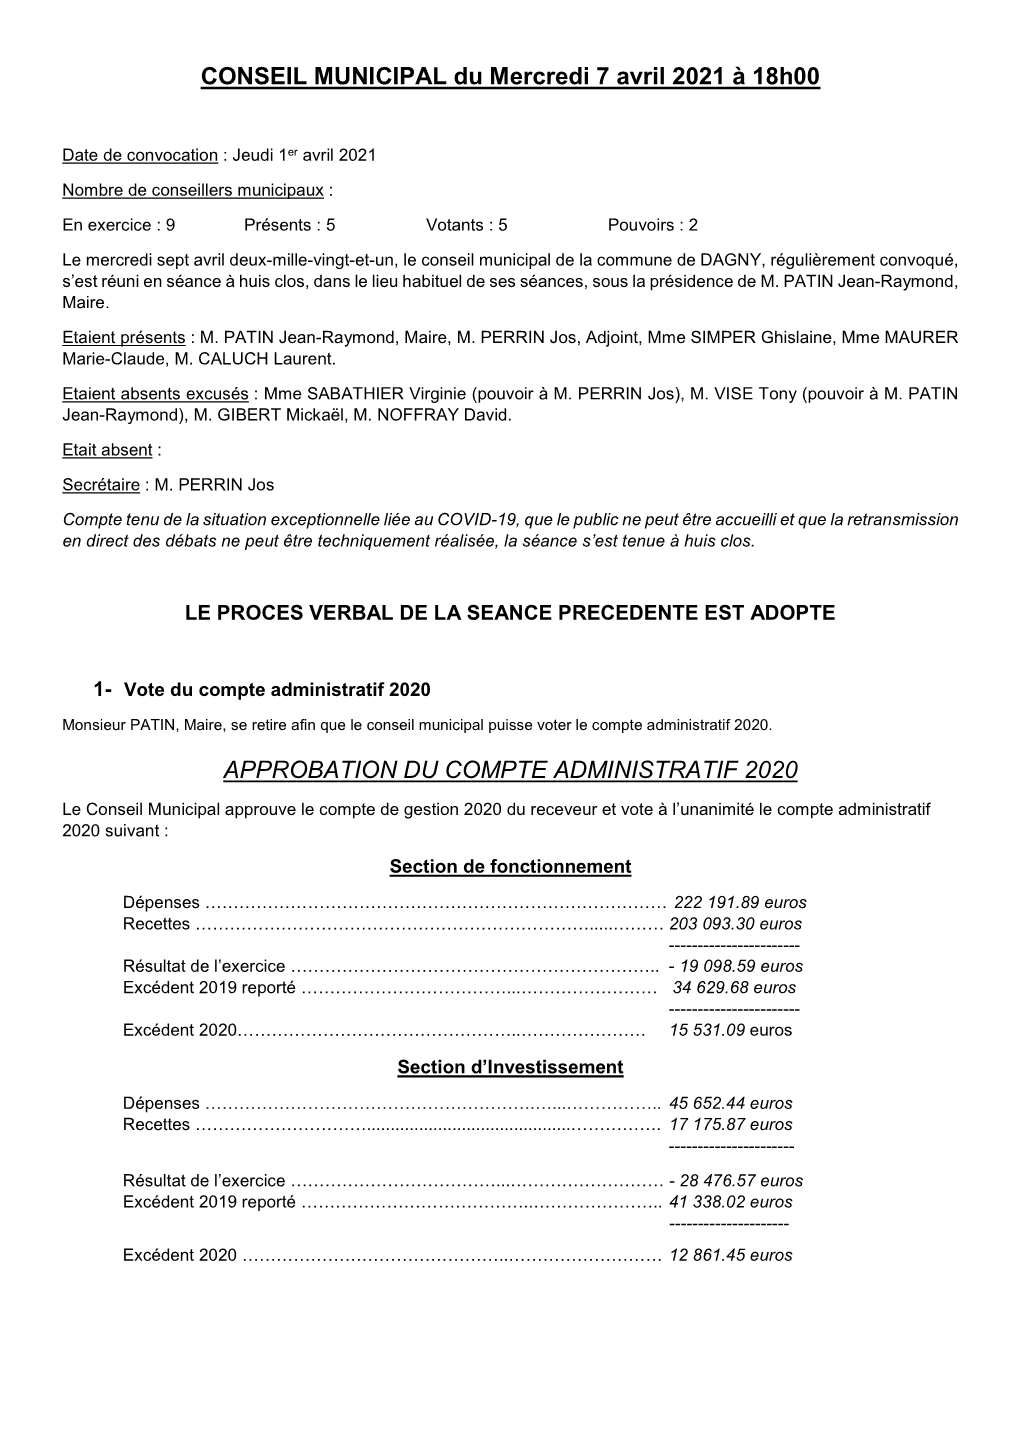 CONSEIL MUNICIPAL Du Mercredi 7 Avril 2021 À 18H00 APPROBATION